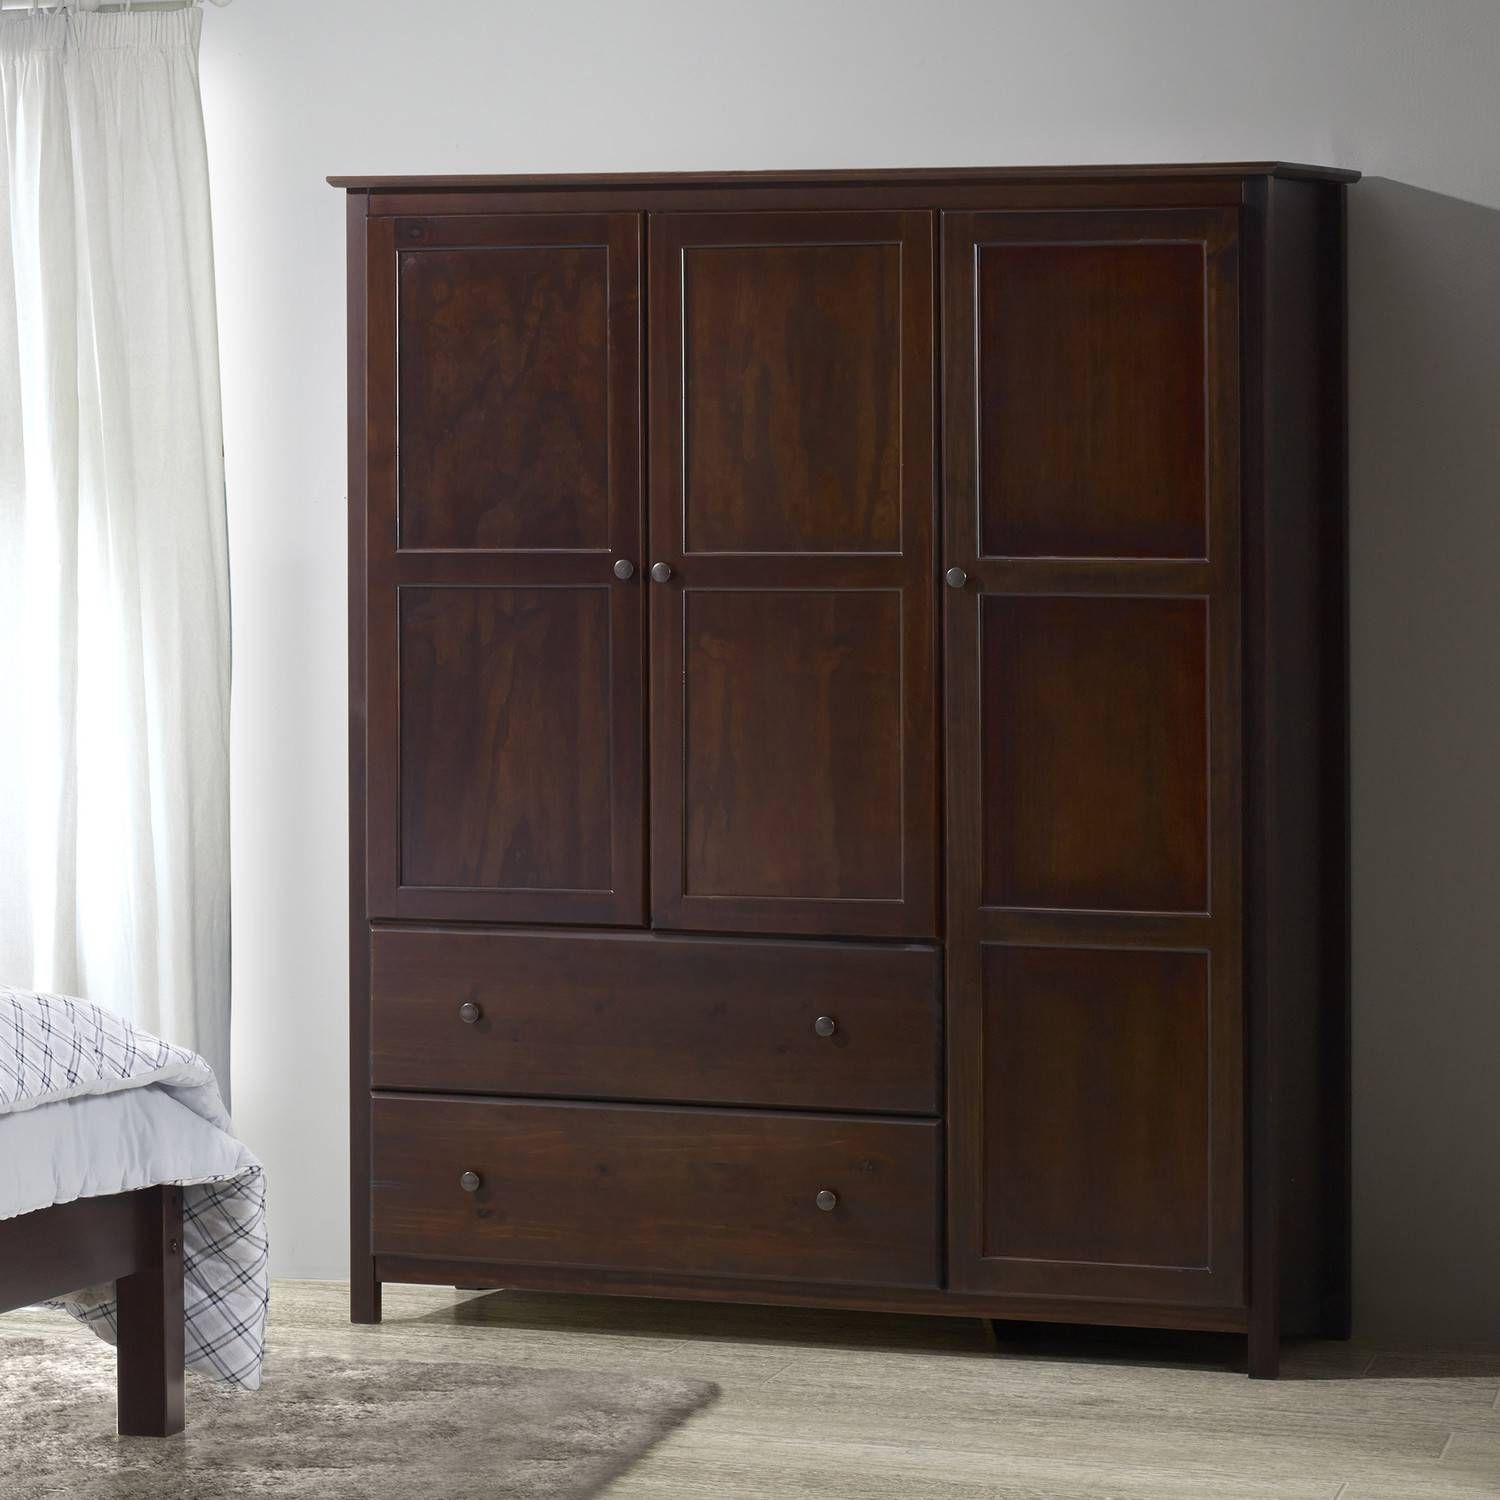 Furniture: Fancy Wardrobe Armoire For Wardrobe Organizer Idea Within Dark Wood Wardrobe Sets (View 27 of 30)